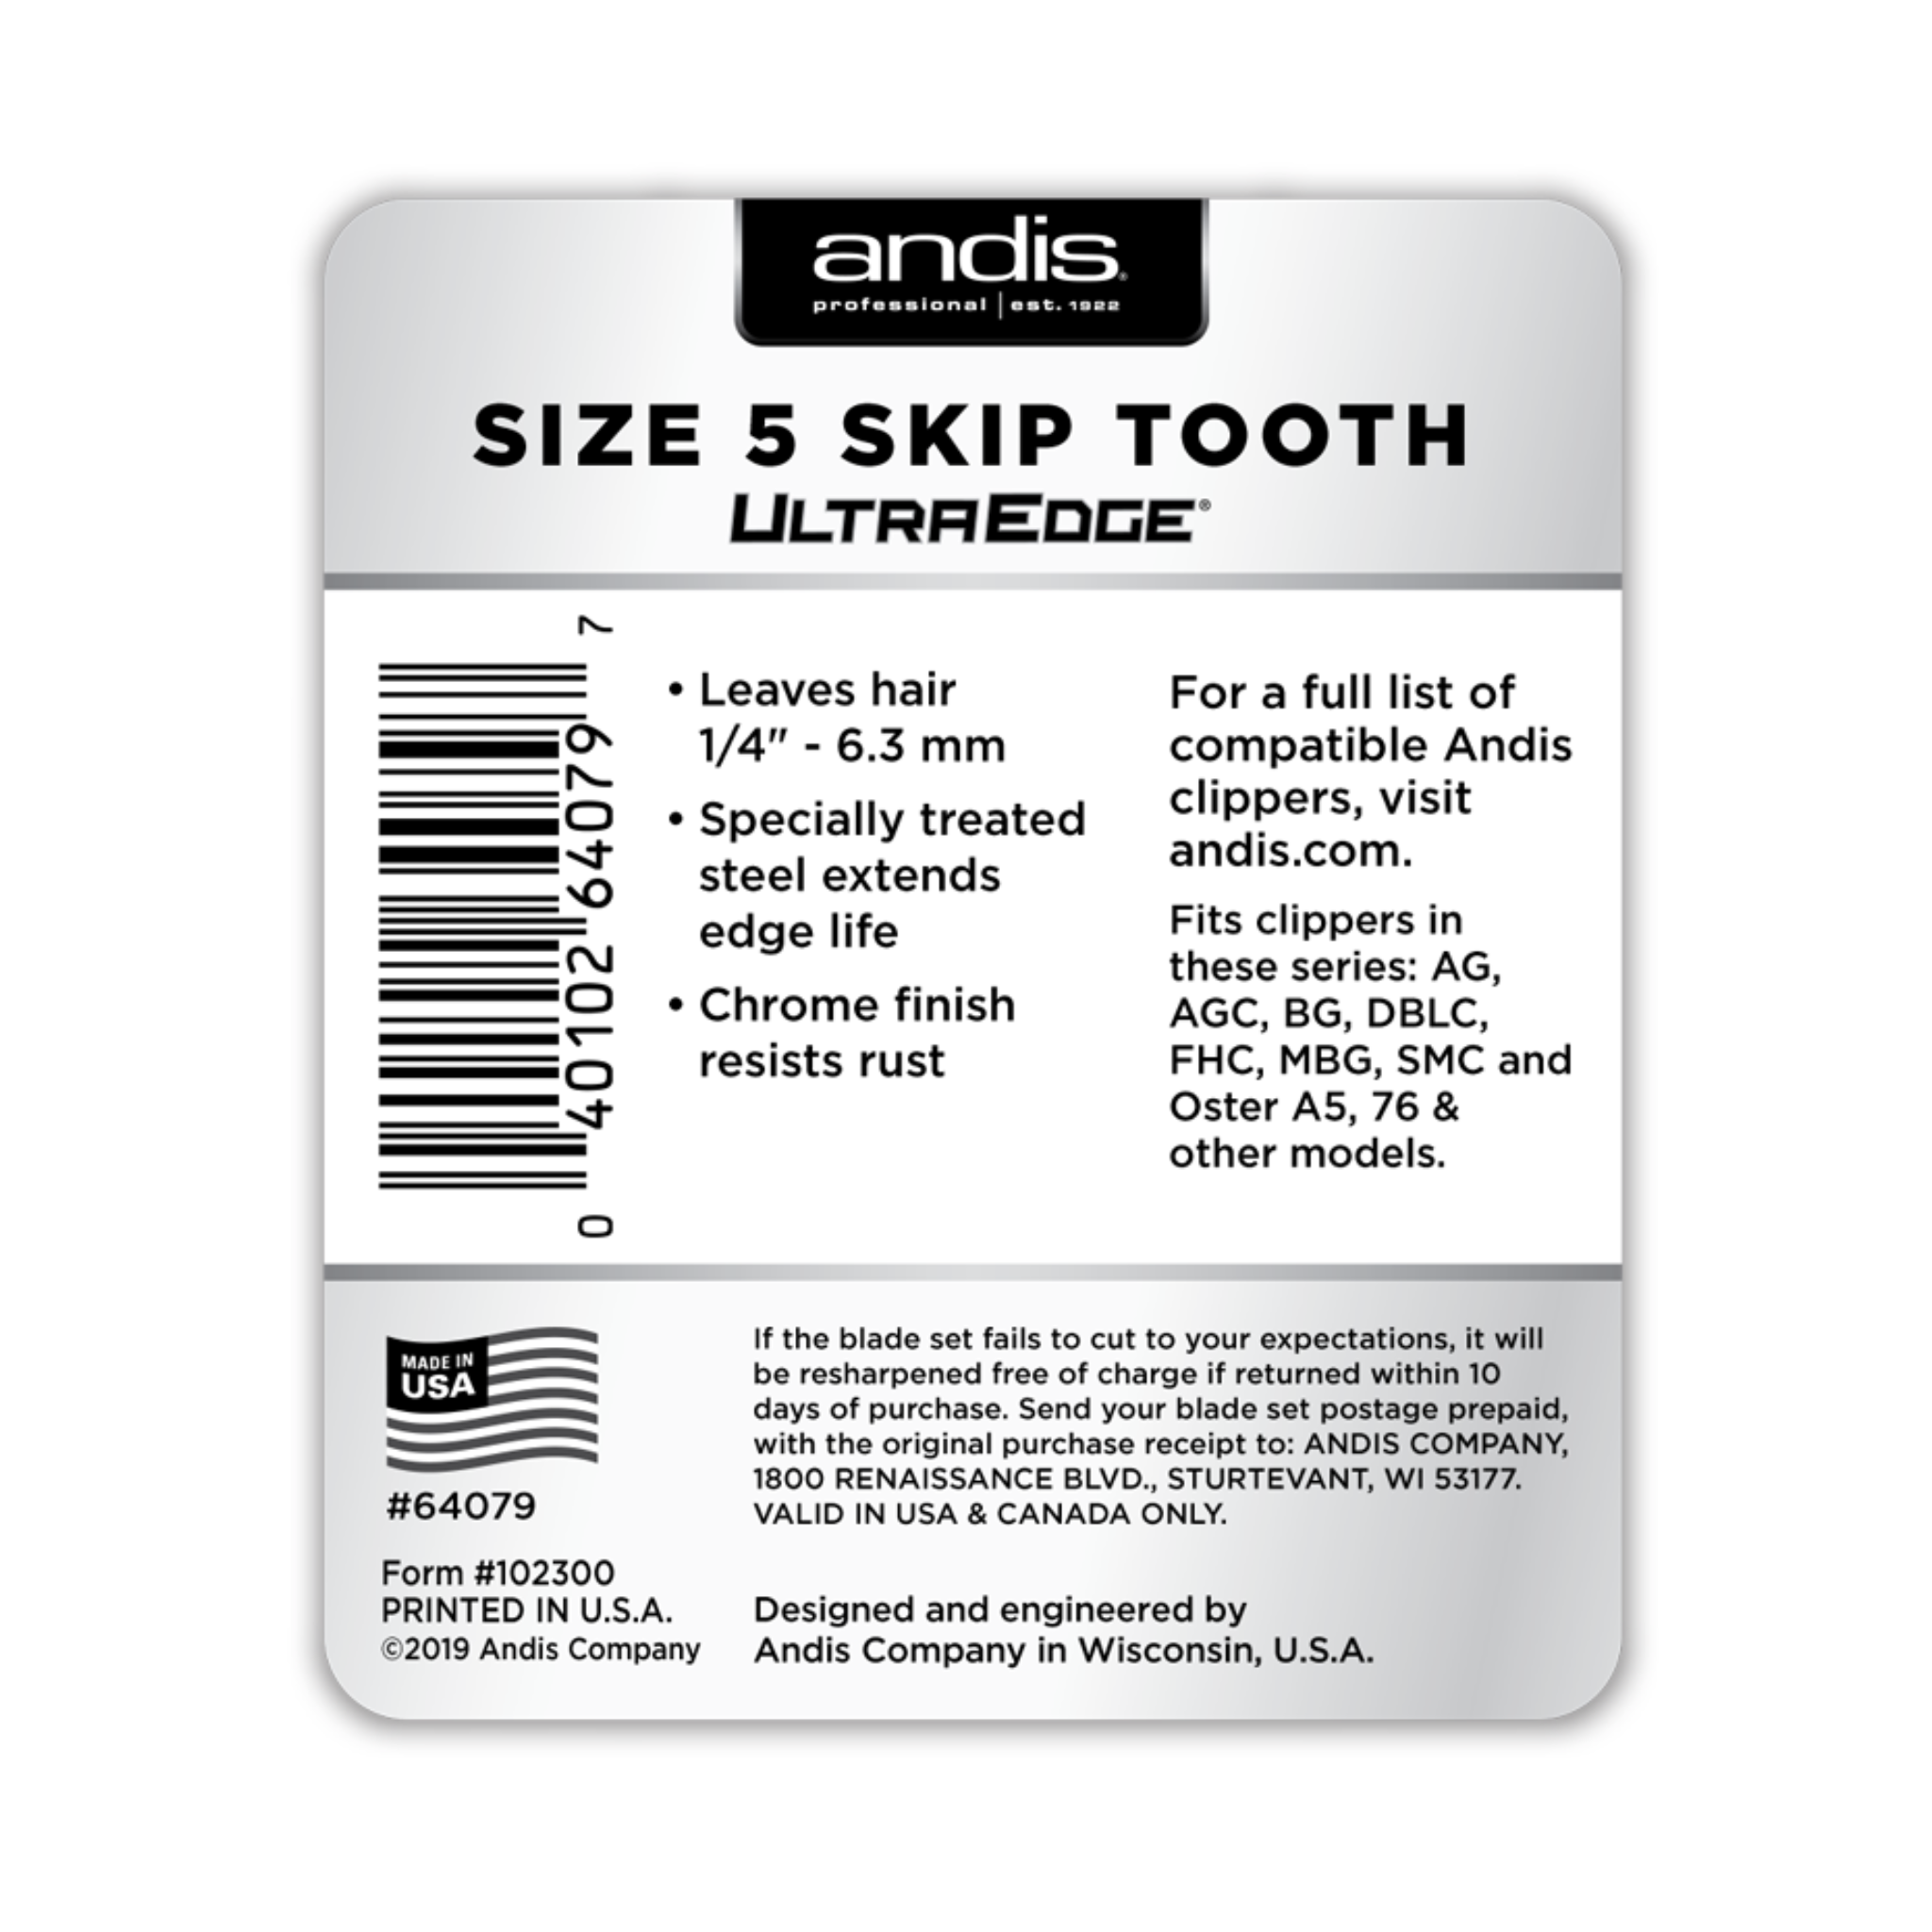 UltraEdge - Skip Tooth Blade Set (Size 5)